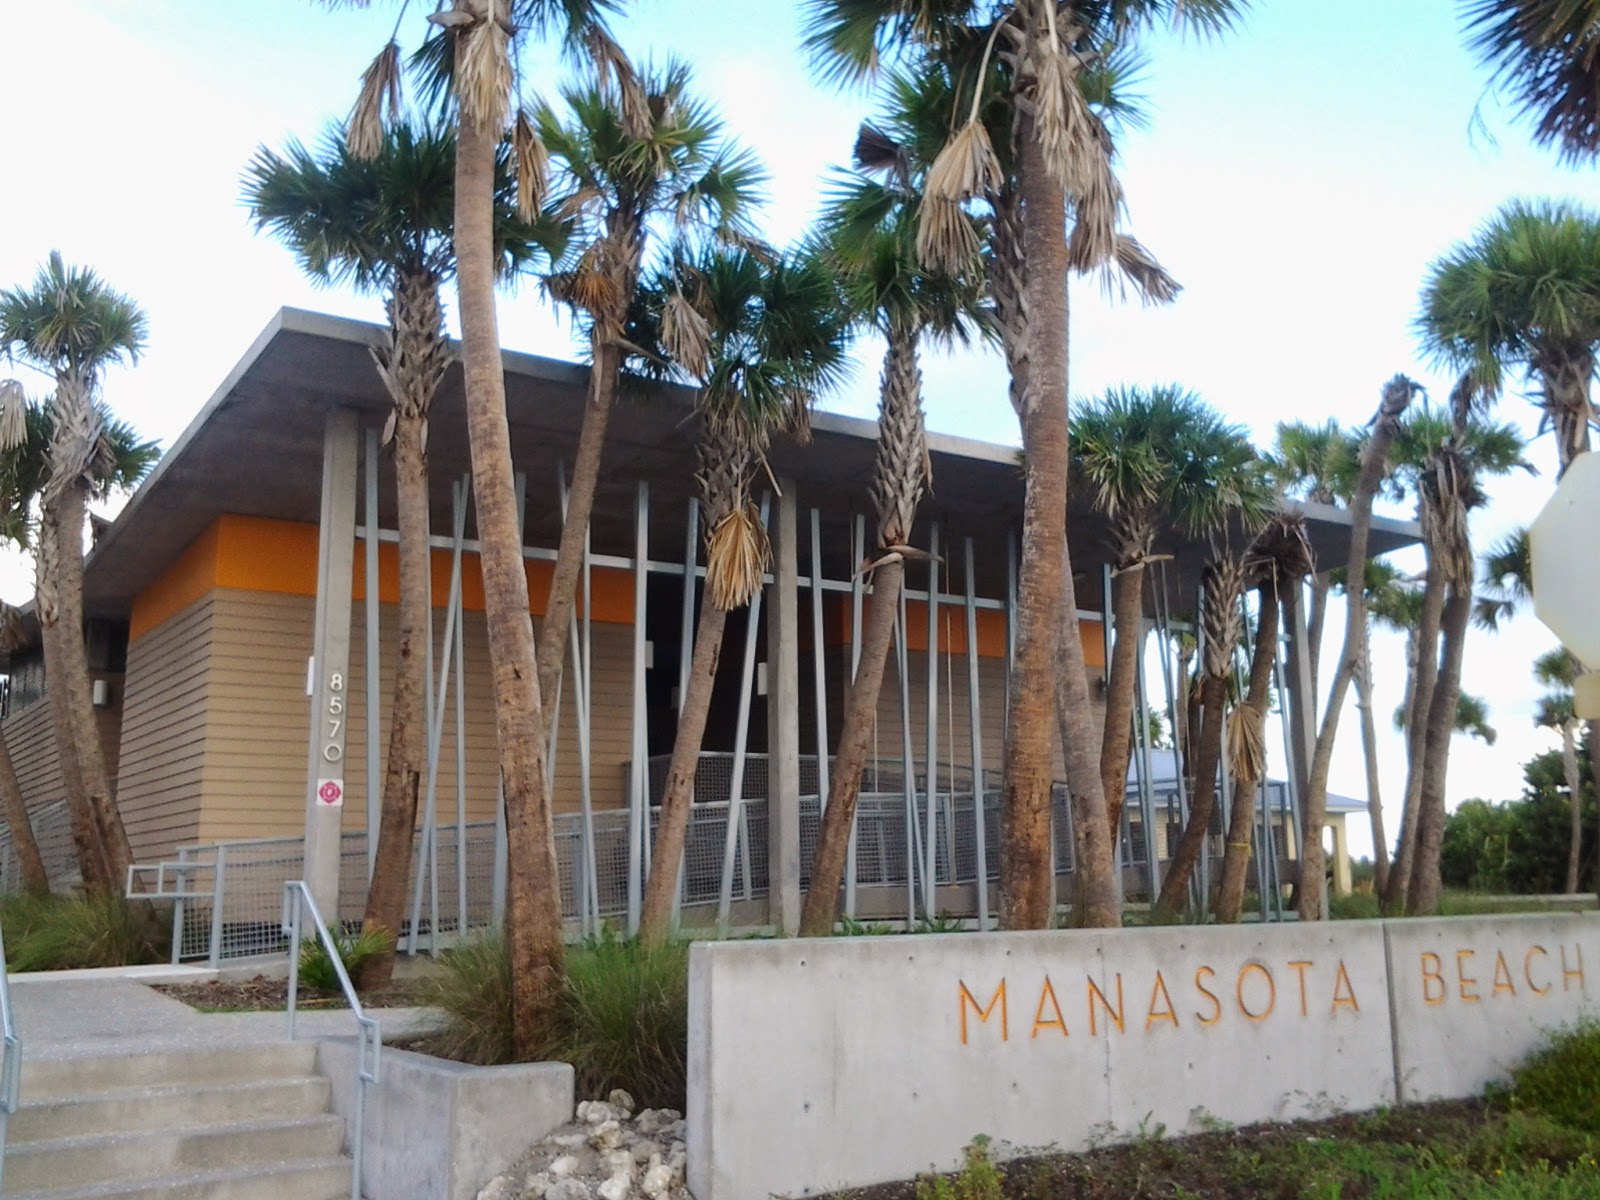 Manasota Key beach